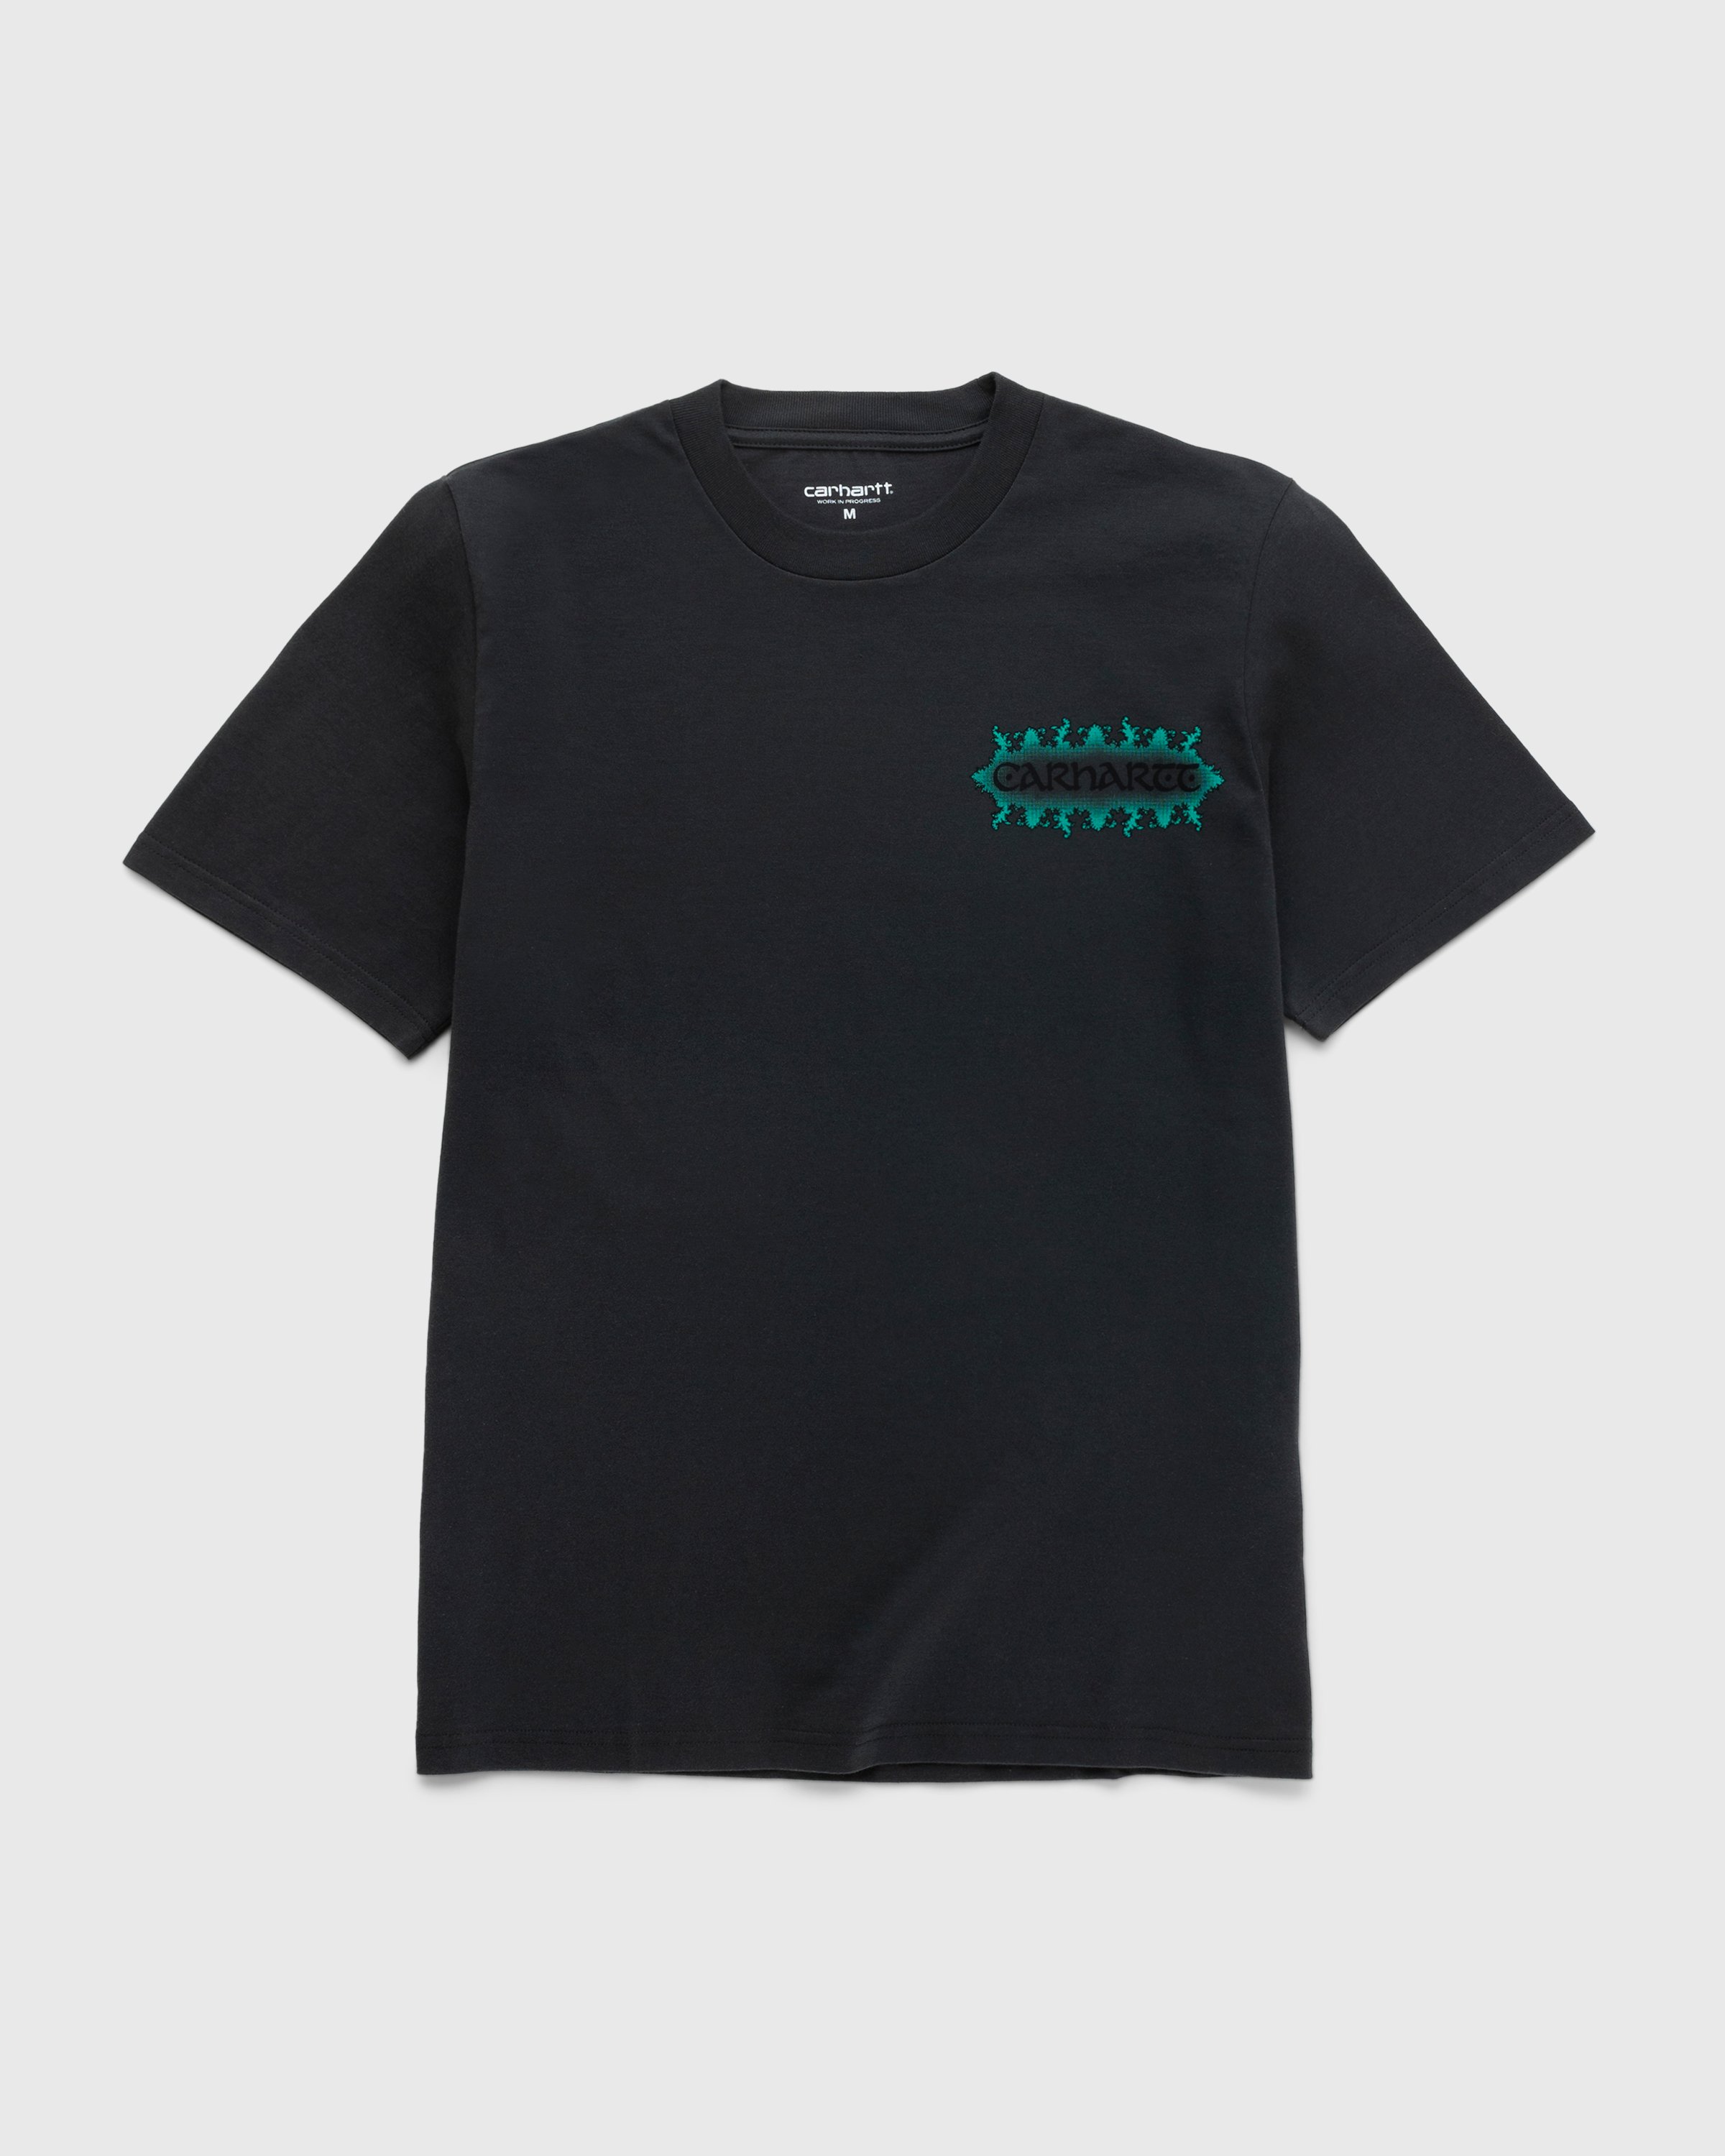 Carhartt WIP - Spaces T-Shirt Vulcan - Clothing - Grey - Image 2